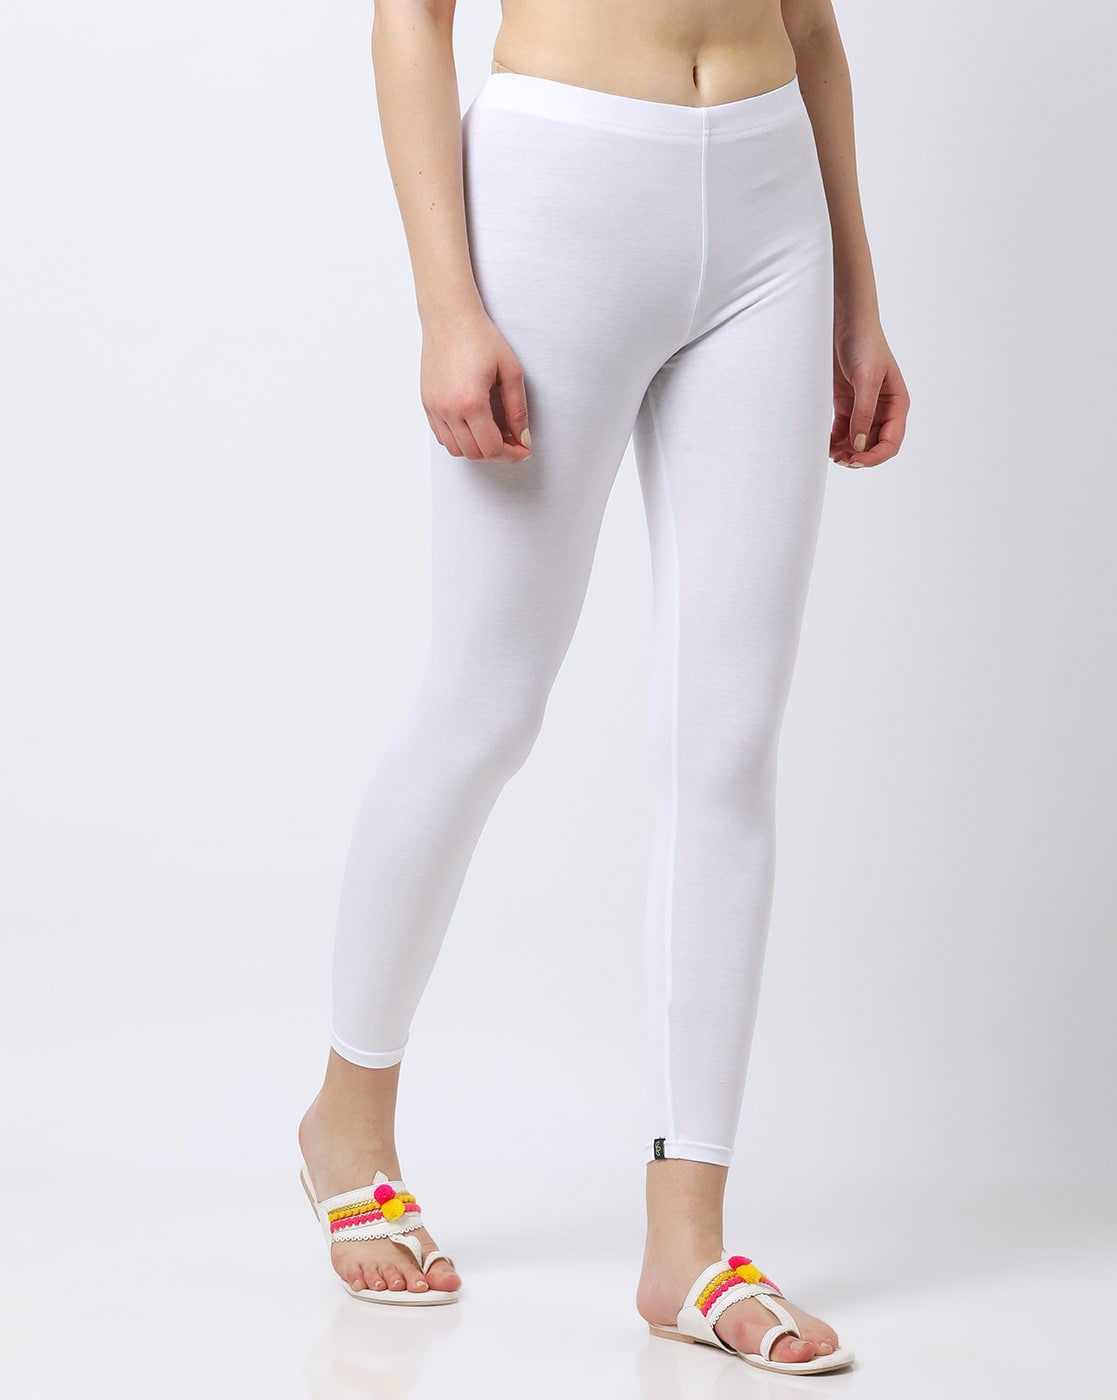 Aggregate more than 138 white leggings women